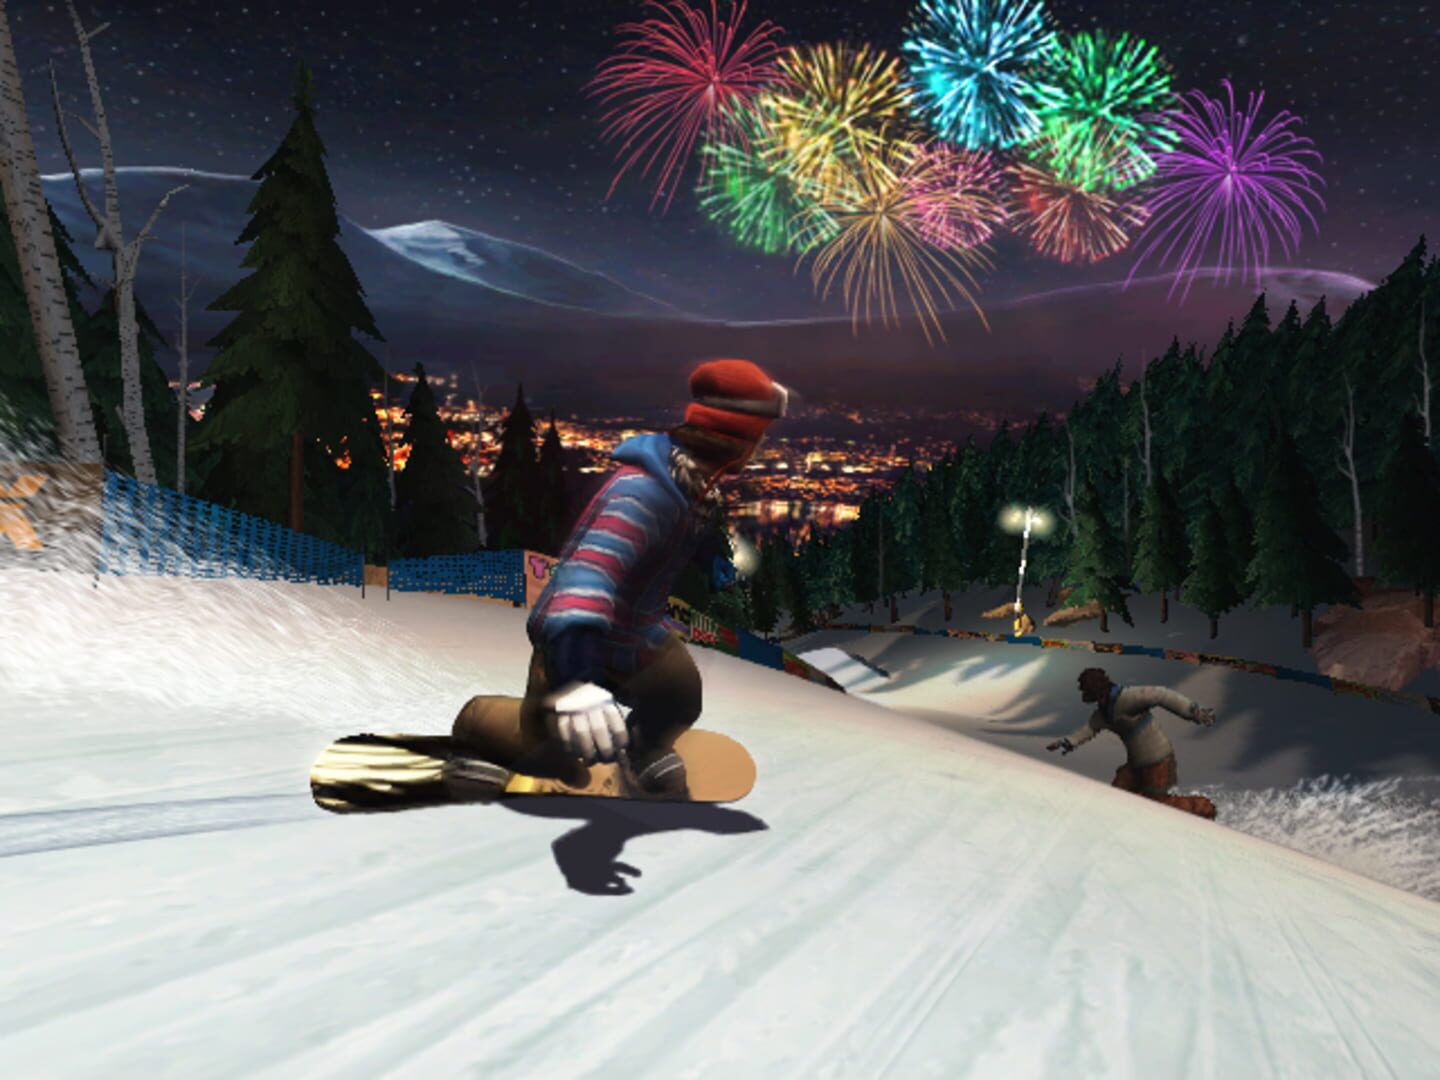 White snowboarding. Shaun White Snowboarding. Игры про сноуборд на ПК старые. Игра на PSP про сноуборды.